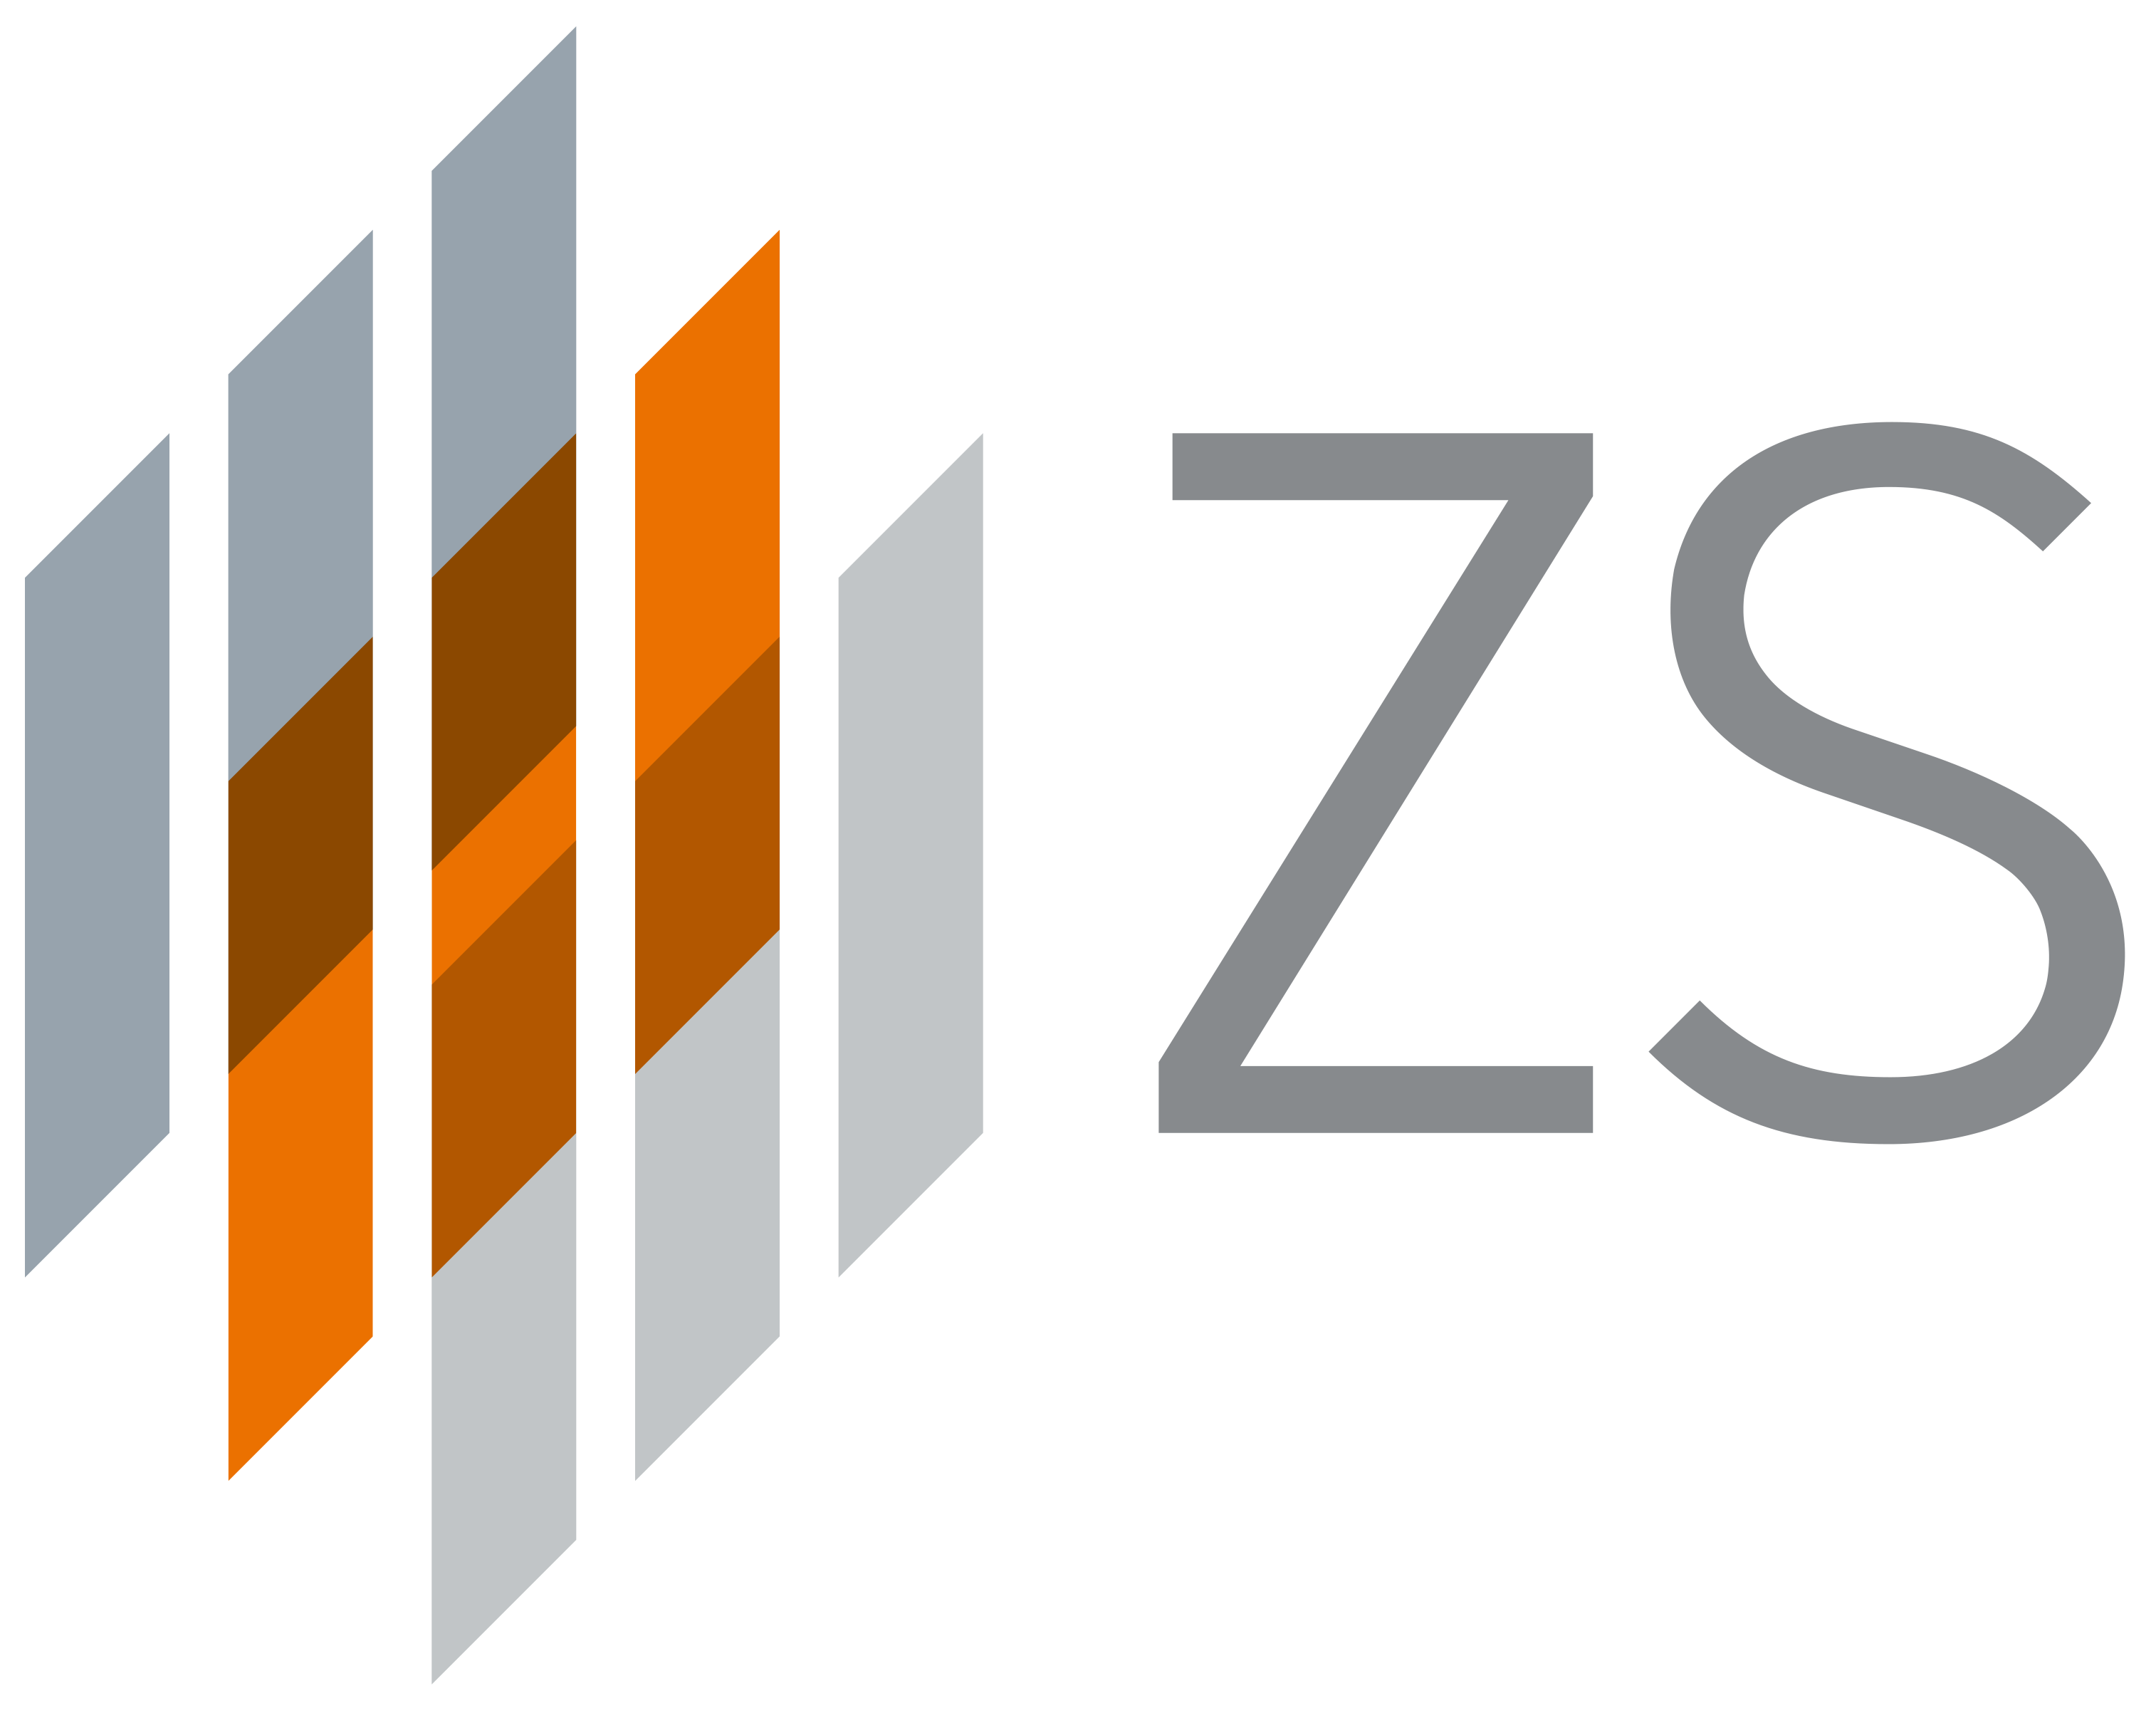 zs associates - zs associates - appexchange